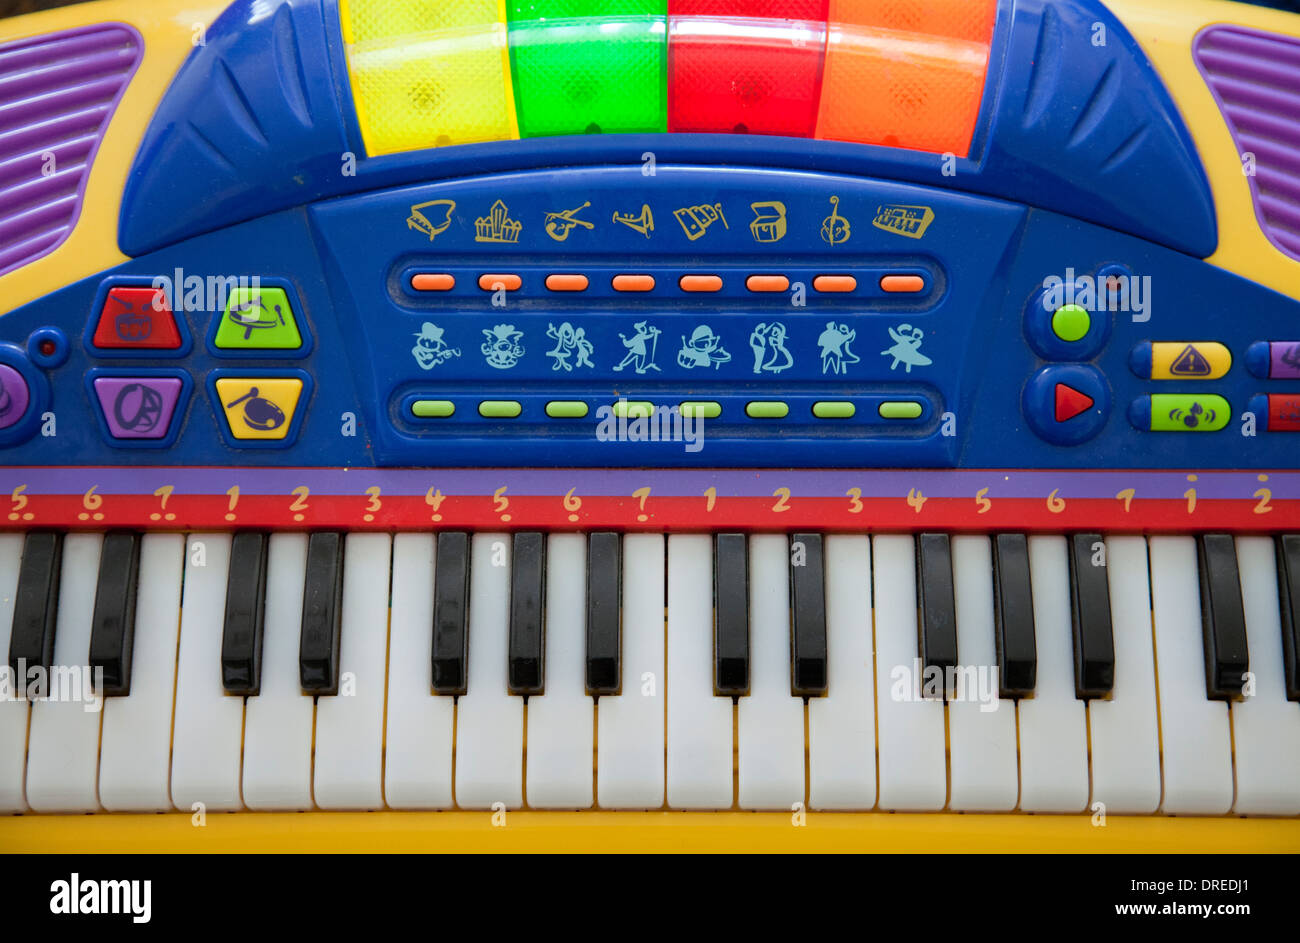 Child's Play Keyboard Stock Photo